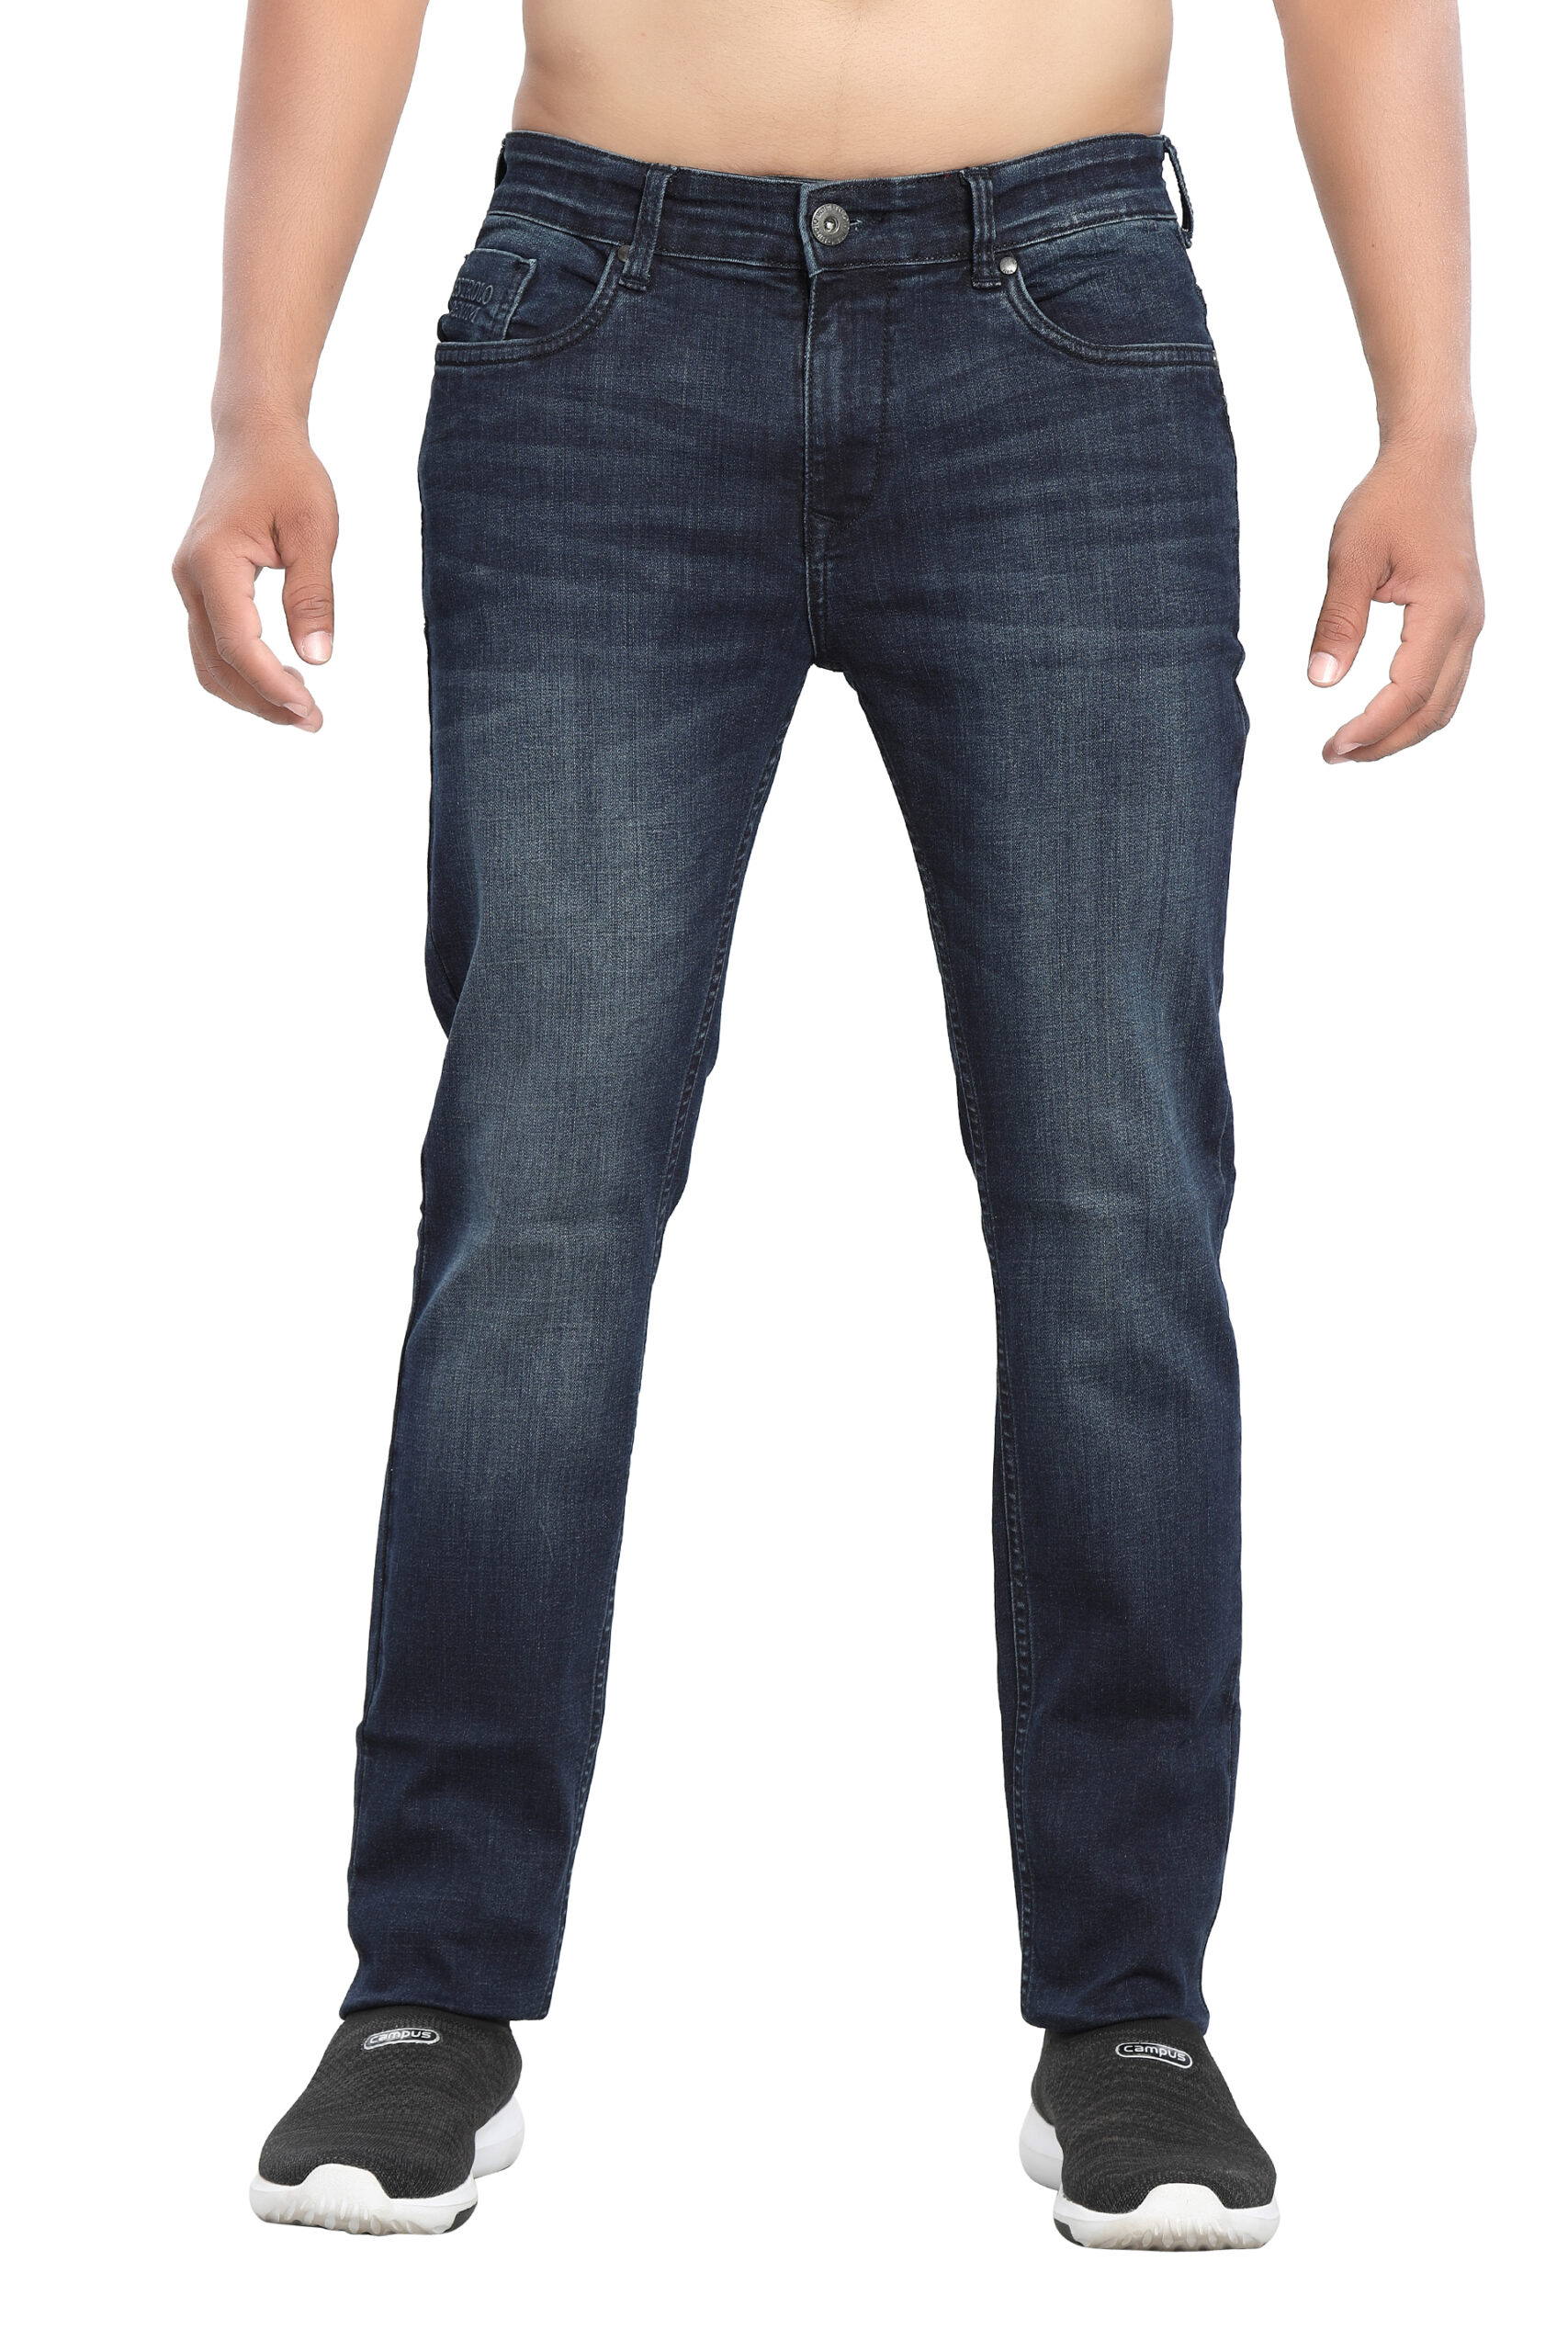 Estrolo, Buy Dark Blue Denim Jeans Pant For Men